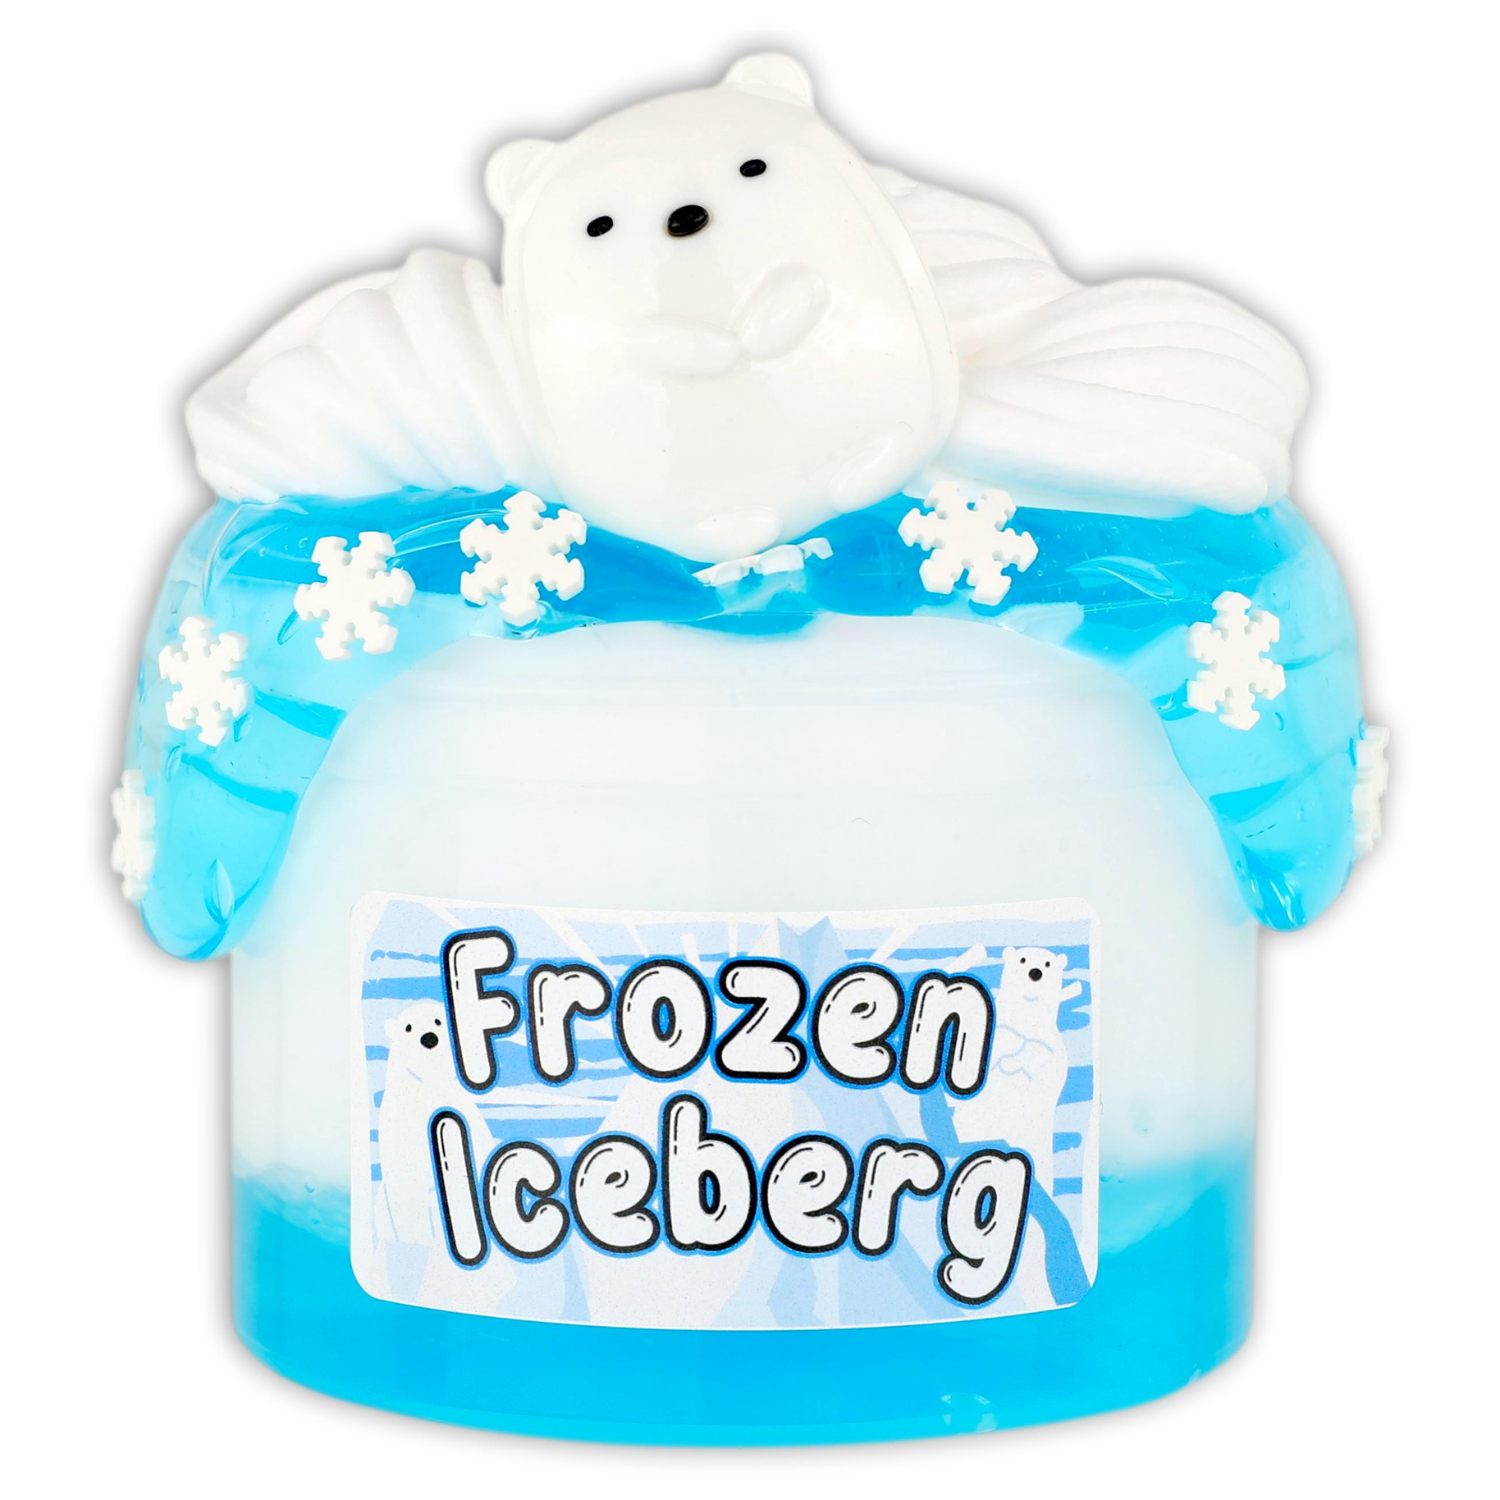 PREORDER: Frozen Iceberg - Wholesale Case of 18 - September 1st Release Date